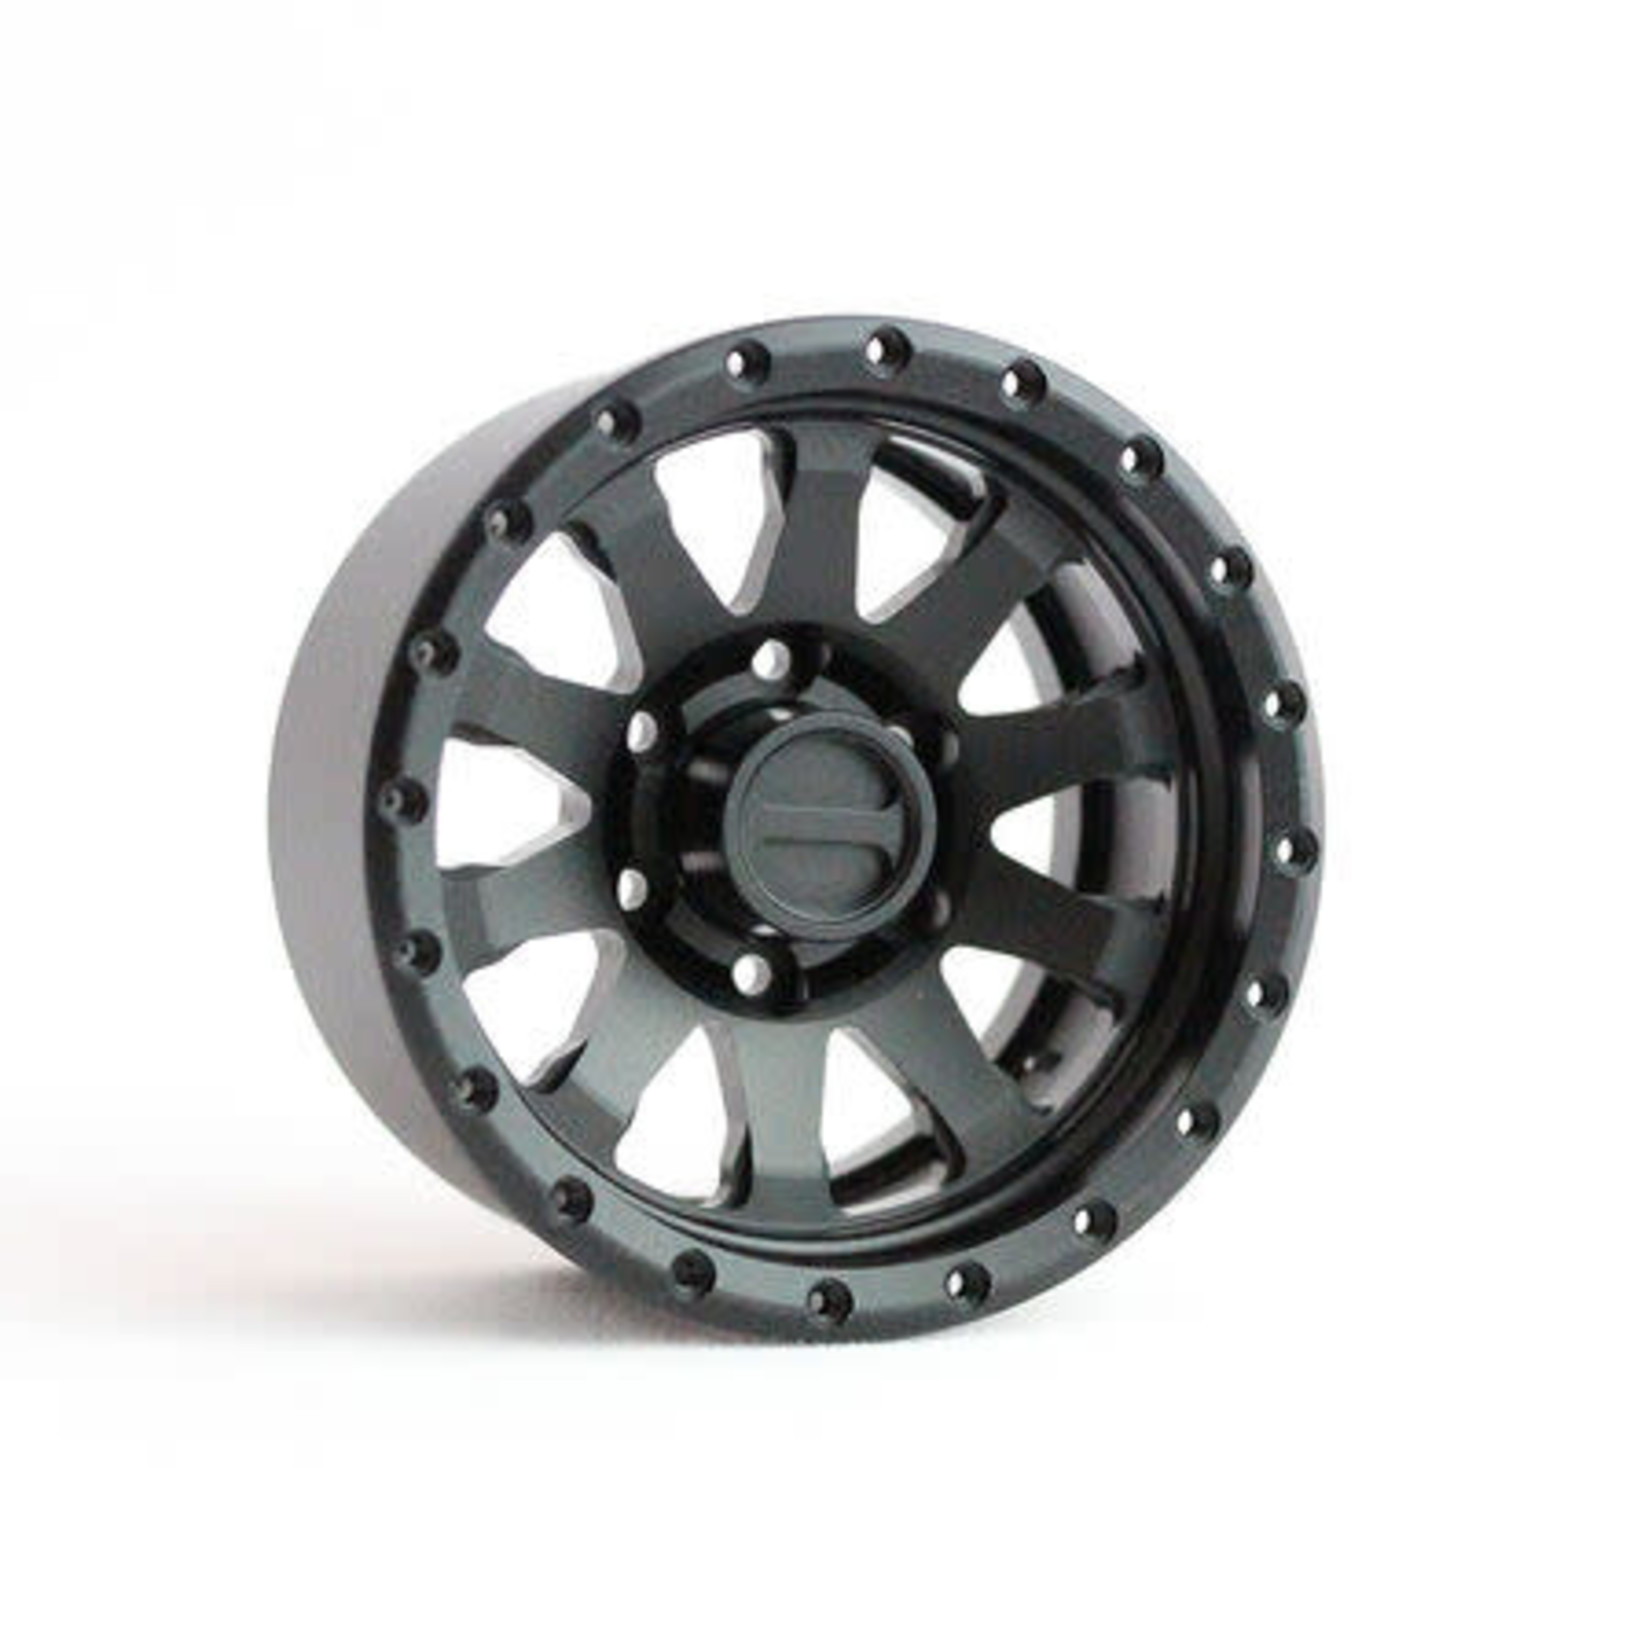 Pitbull 1.9 Raceline Clutch Aluminum Wheels (4) - Blk